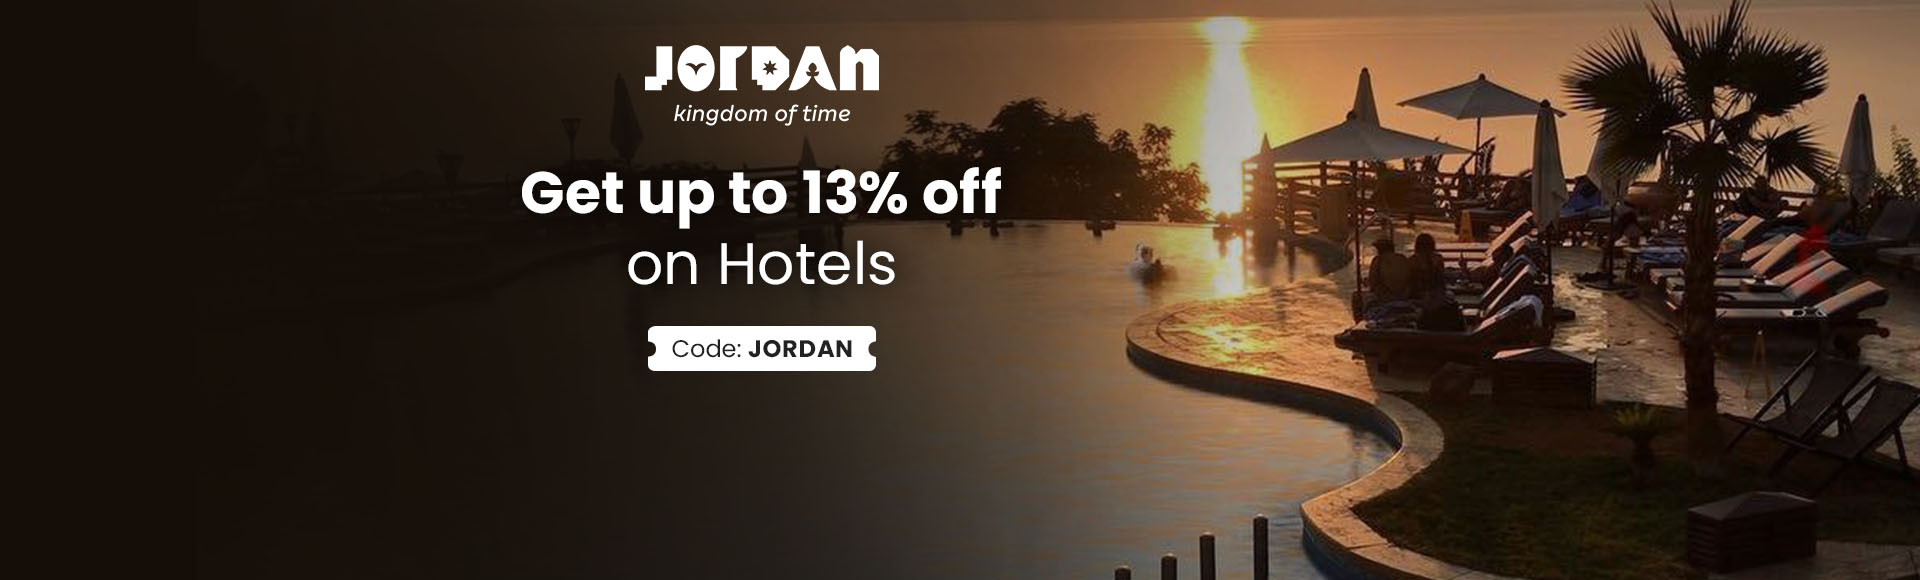 Hotel offer